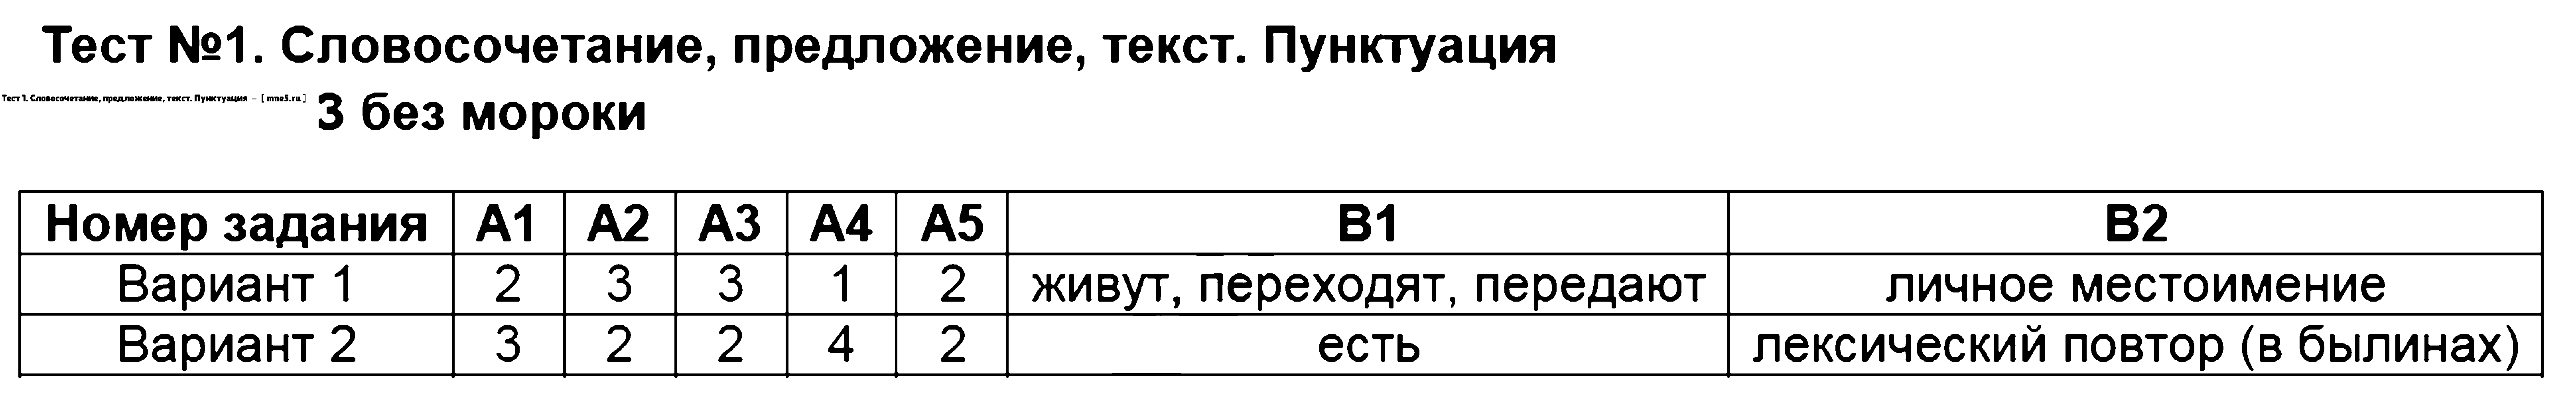 ГДЗ Русский язык 7 класс - Тест 1. Словосочетание, предложение, текст. Пунктуация